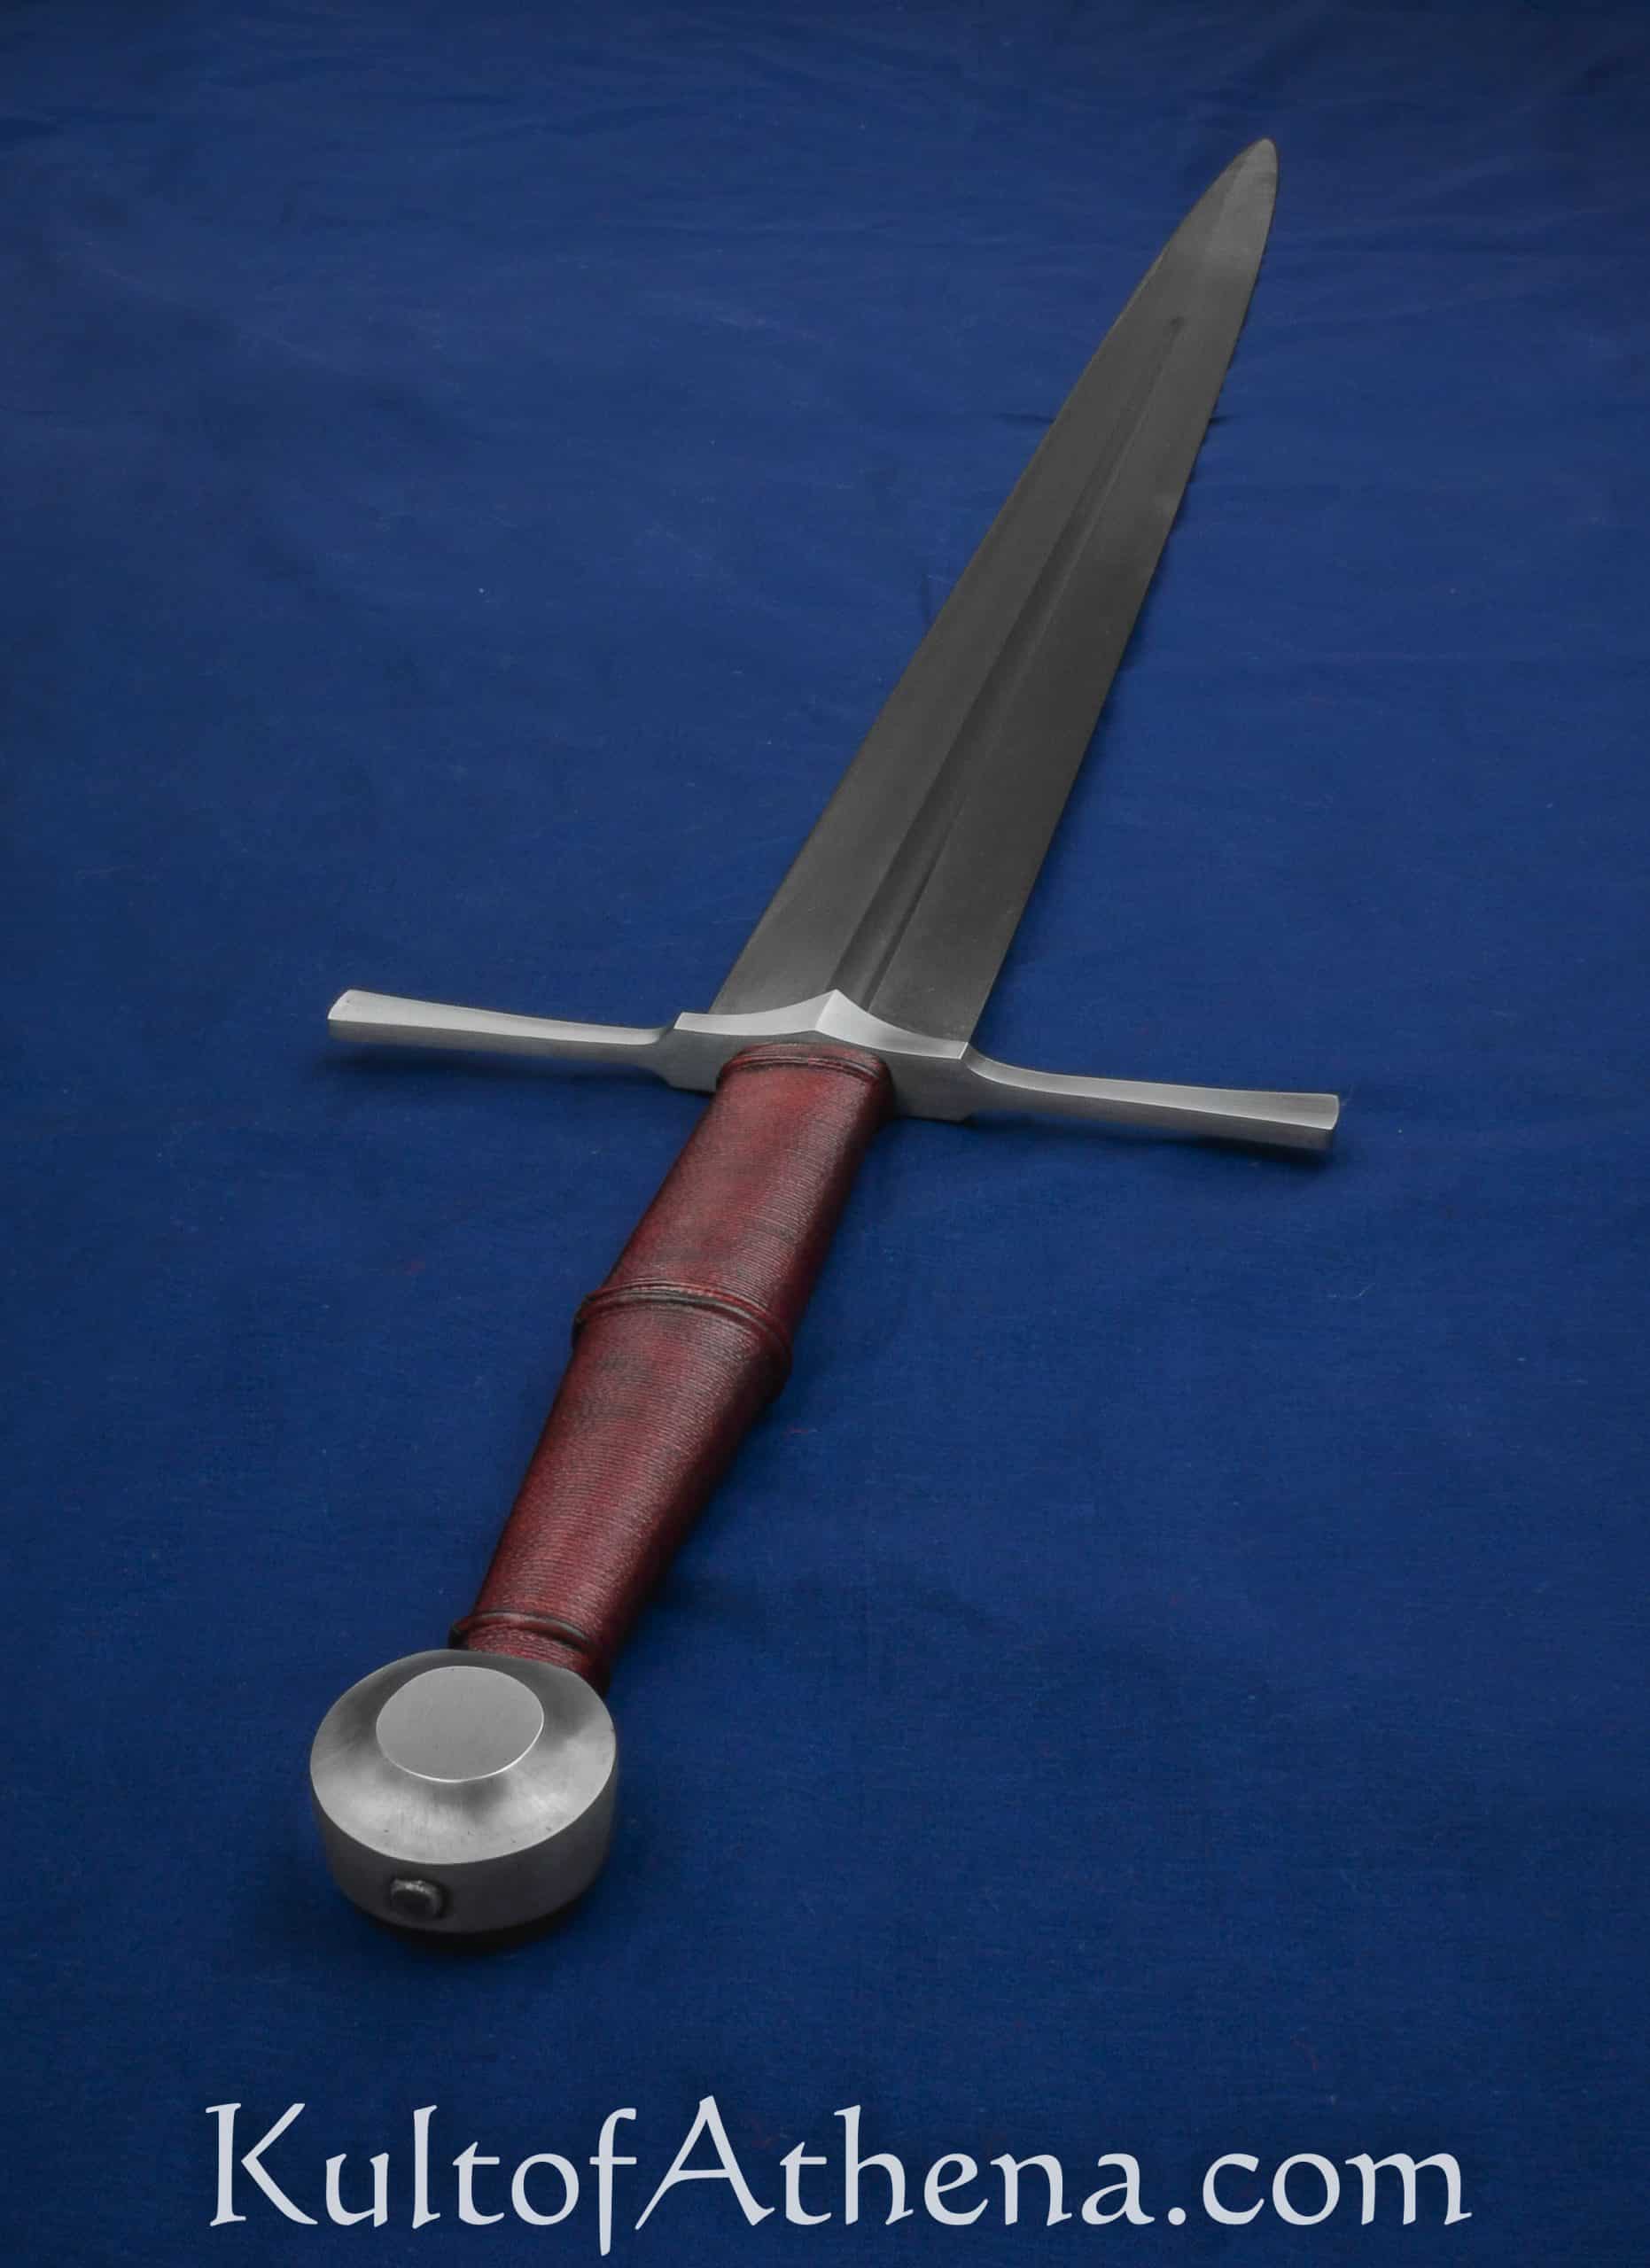 Valiant Armoury Craftsman Series – The Medieval War Sword